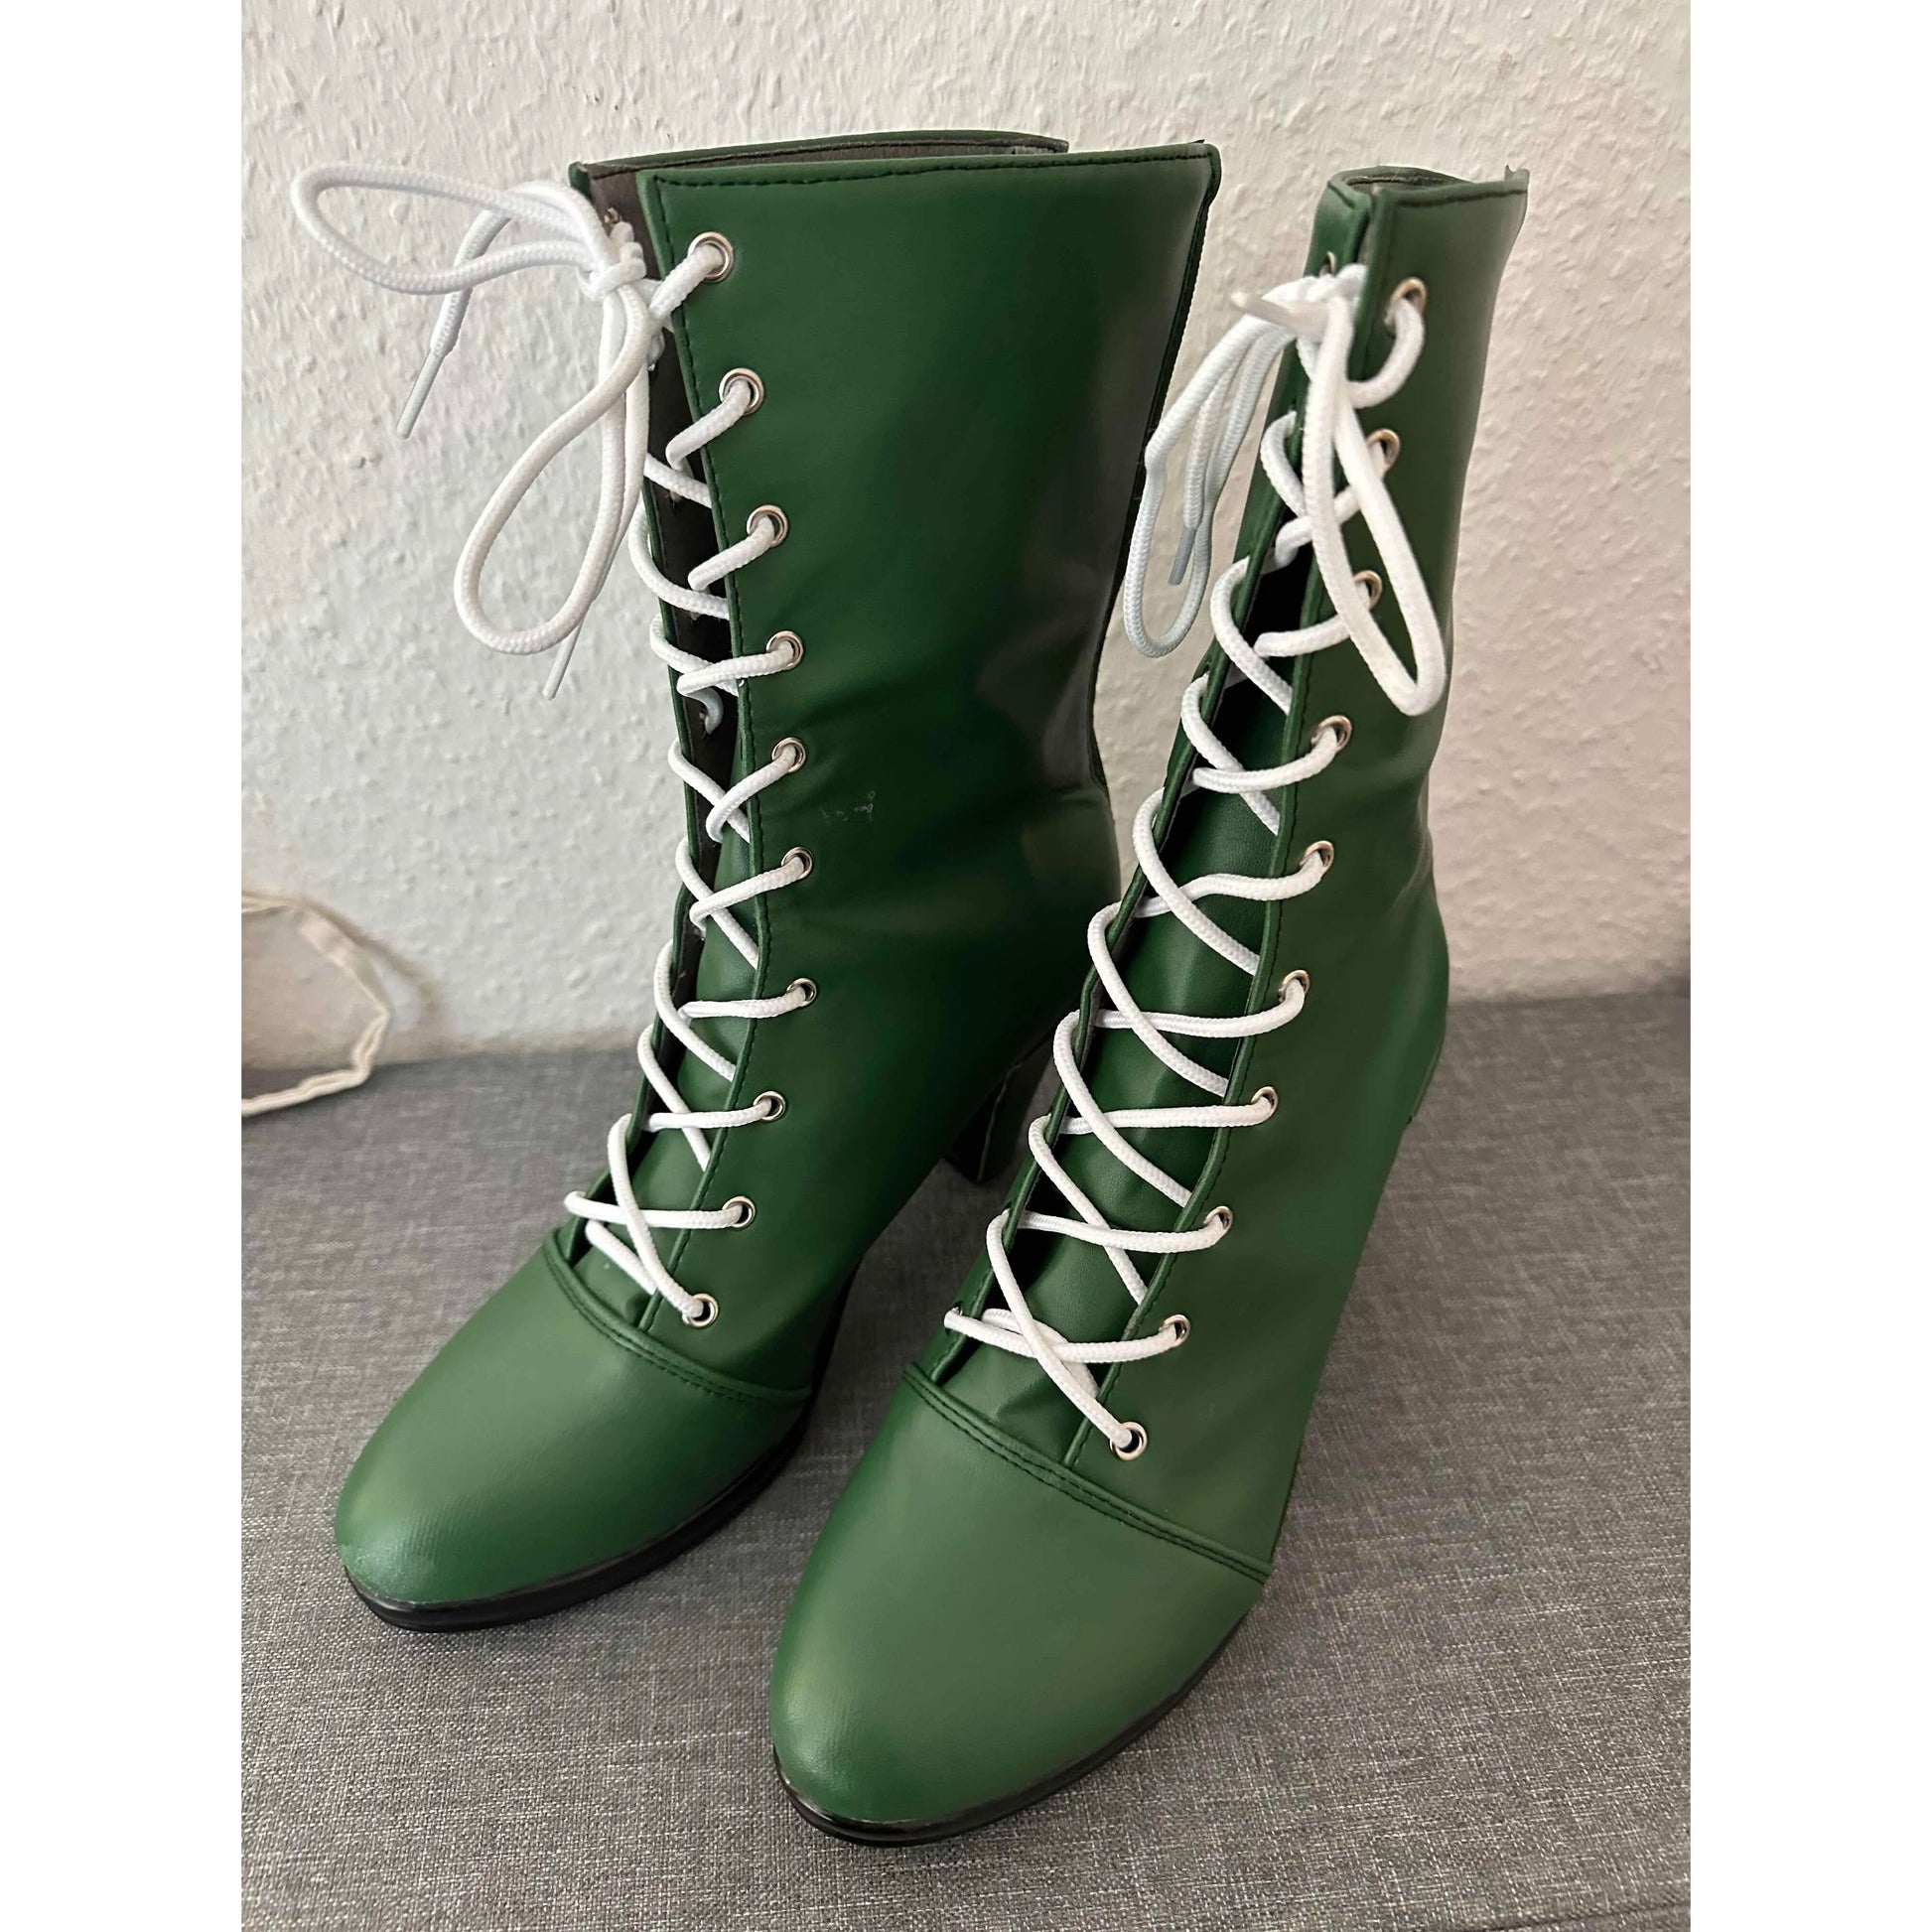 Makoto Kino unisex Shoes Cosplay green high heel.